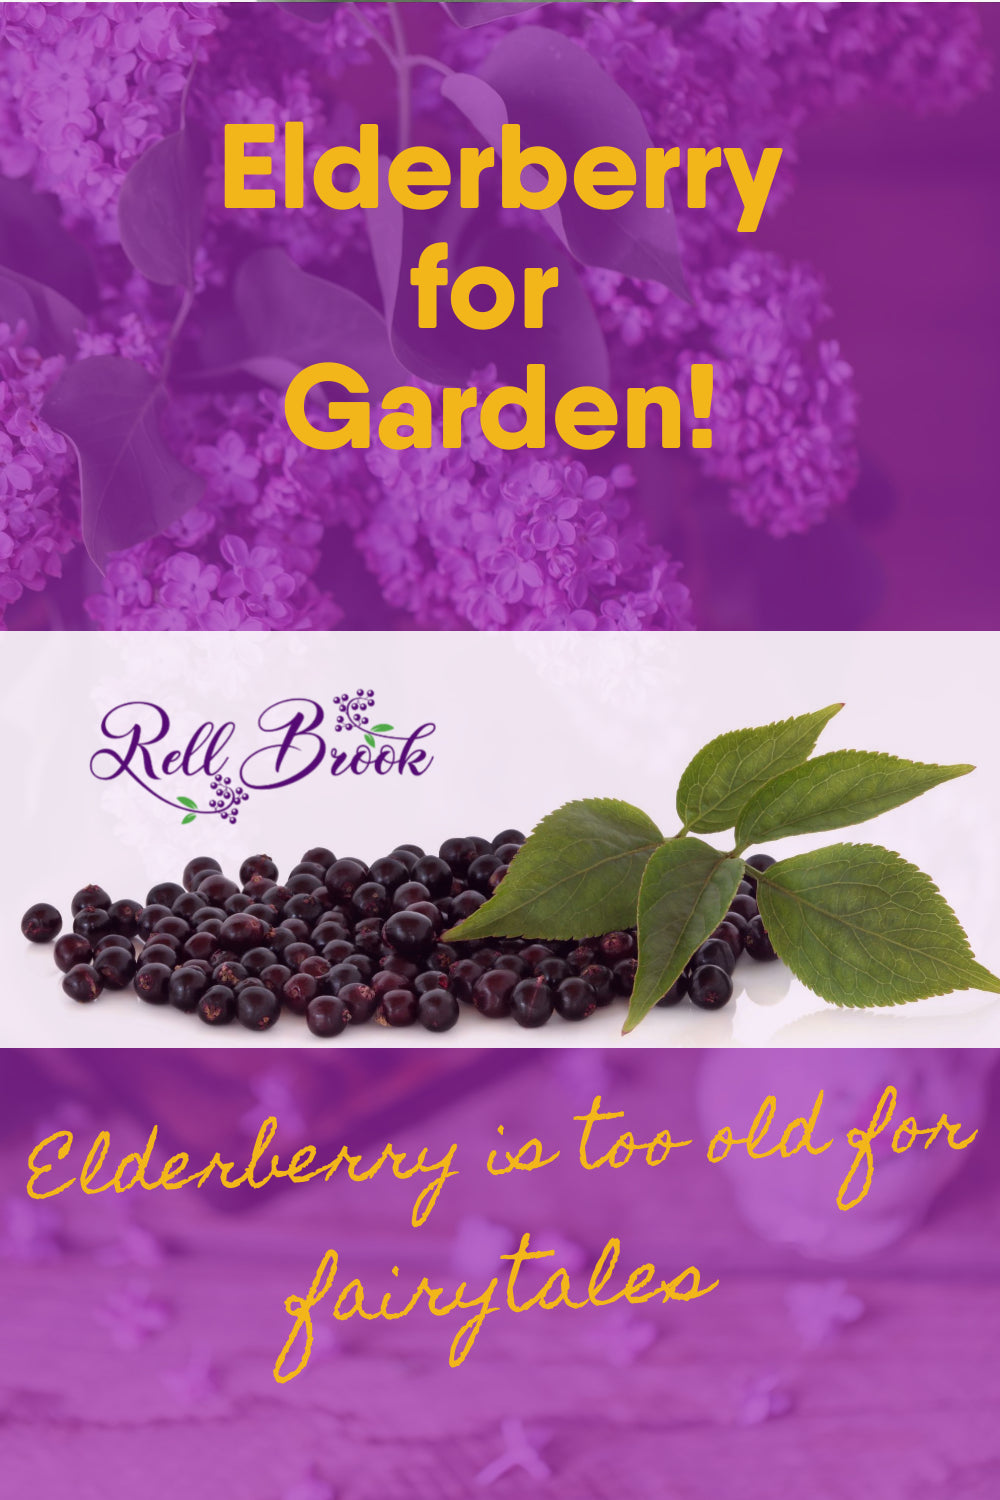 Elderberry bushes